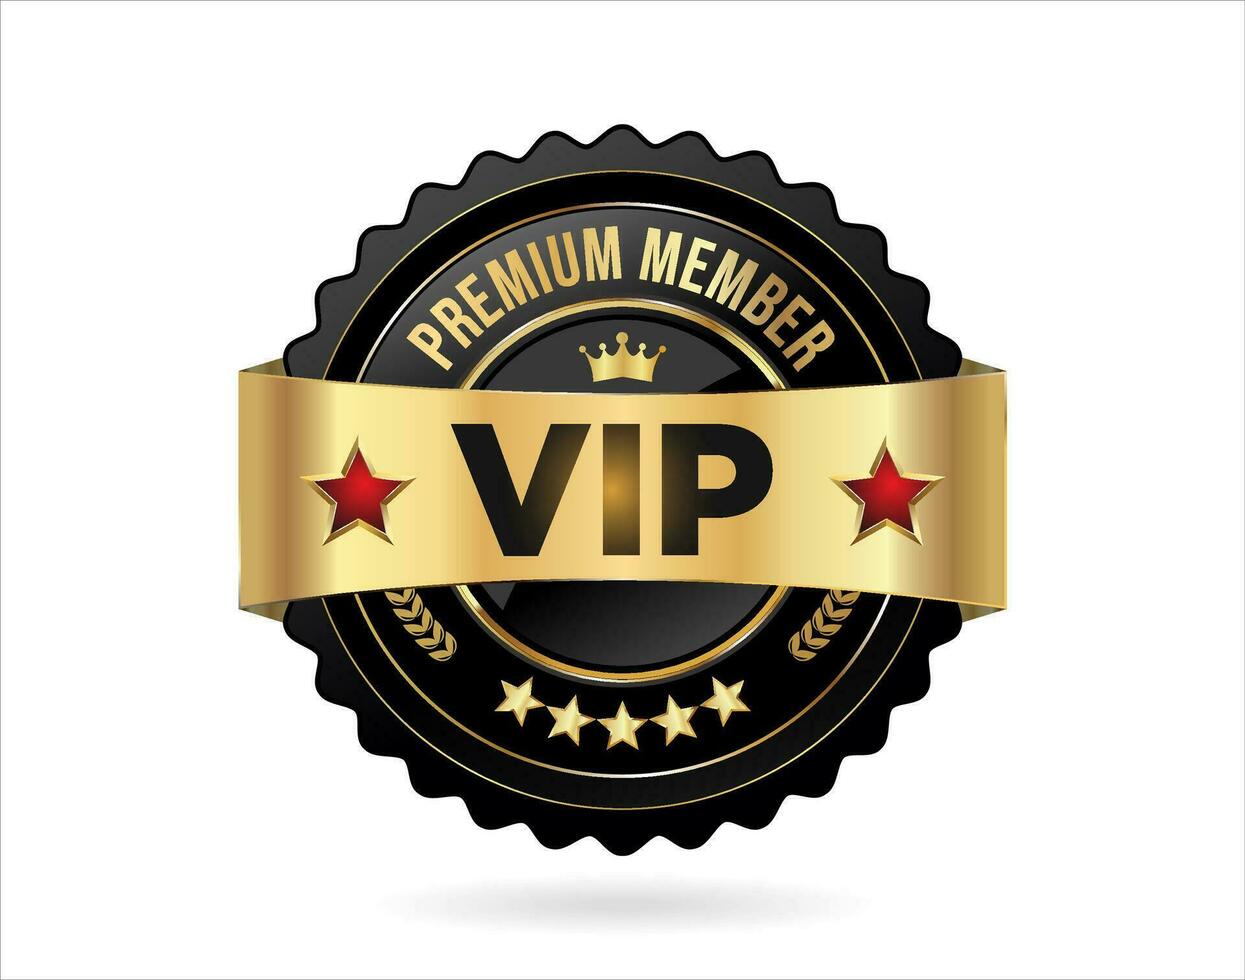 insignia de oro de membresía premium vip sobre fondo blanco vector